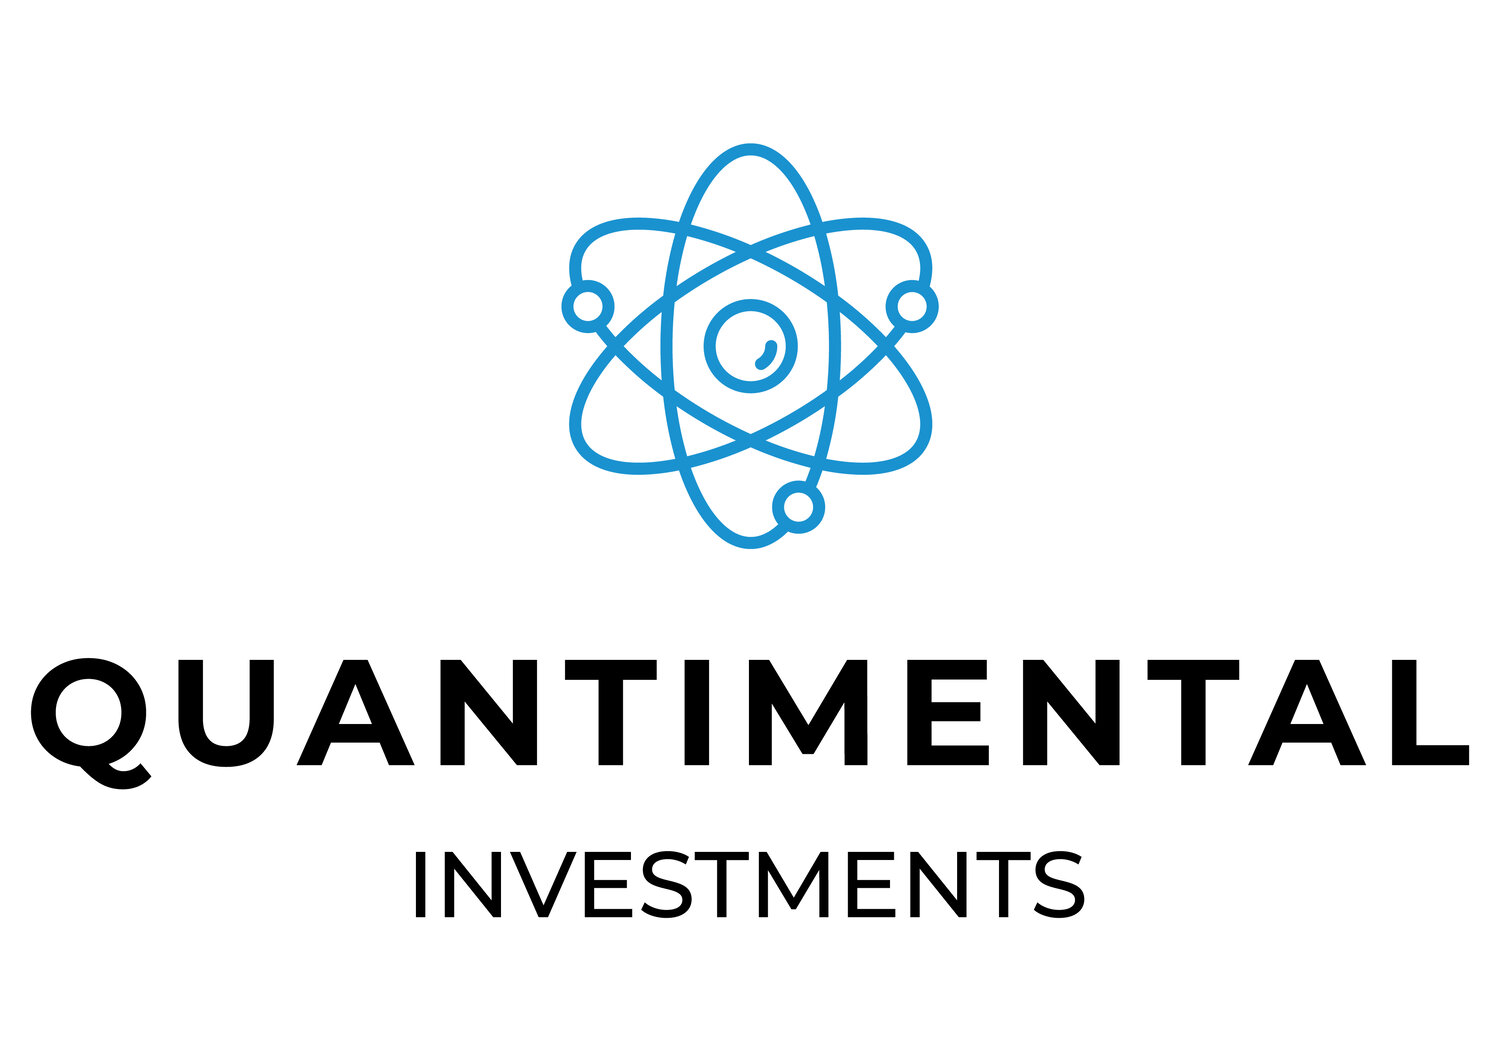 Quantimental Investments